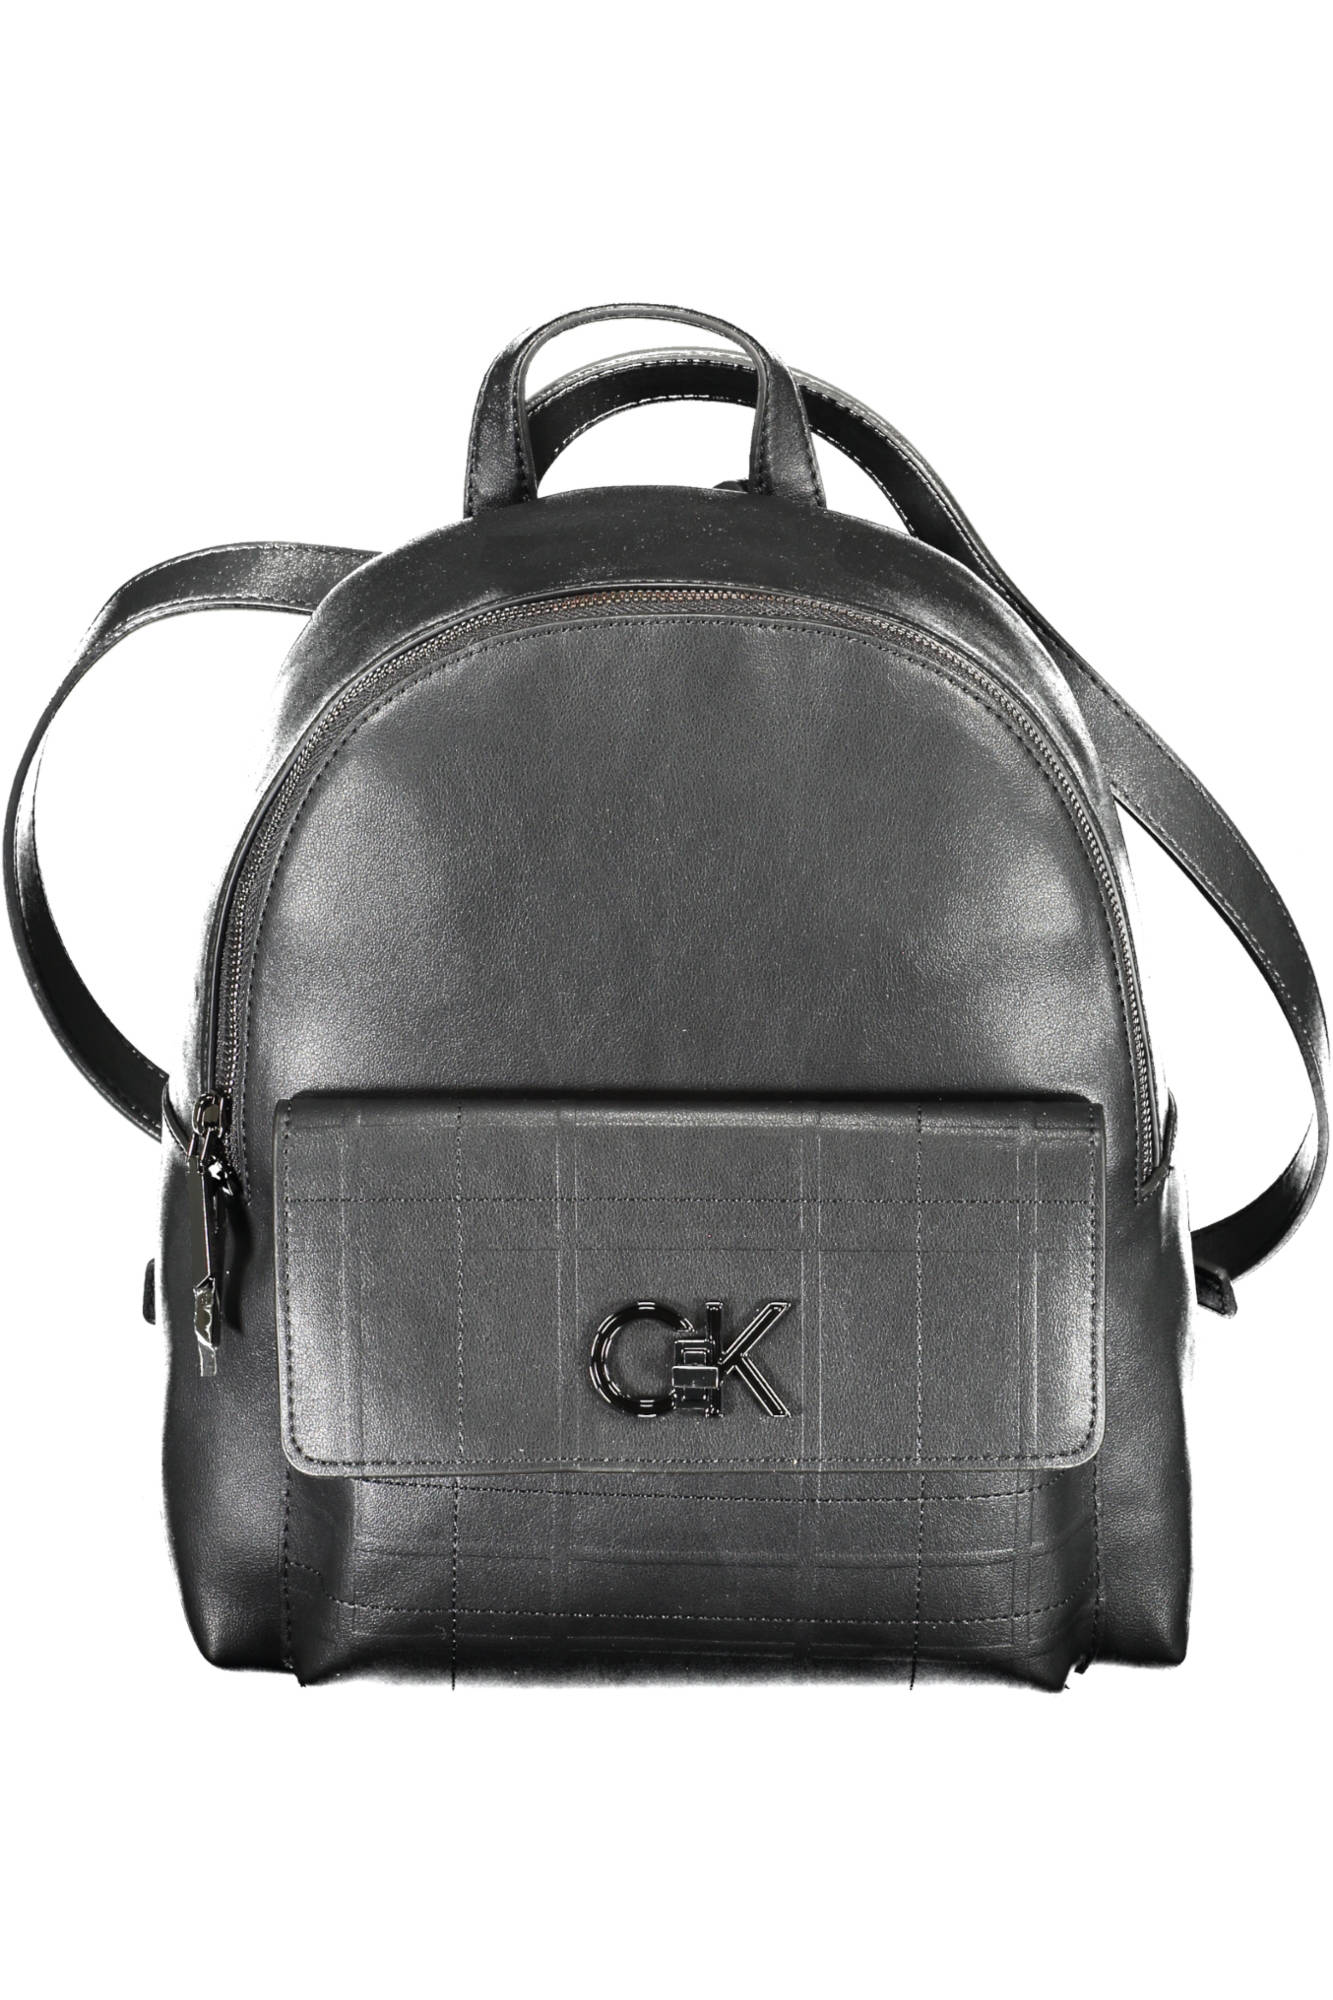 Calvin Klein Handbags : Bags & Accessories - Walmart.com